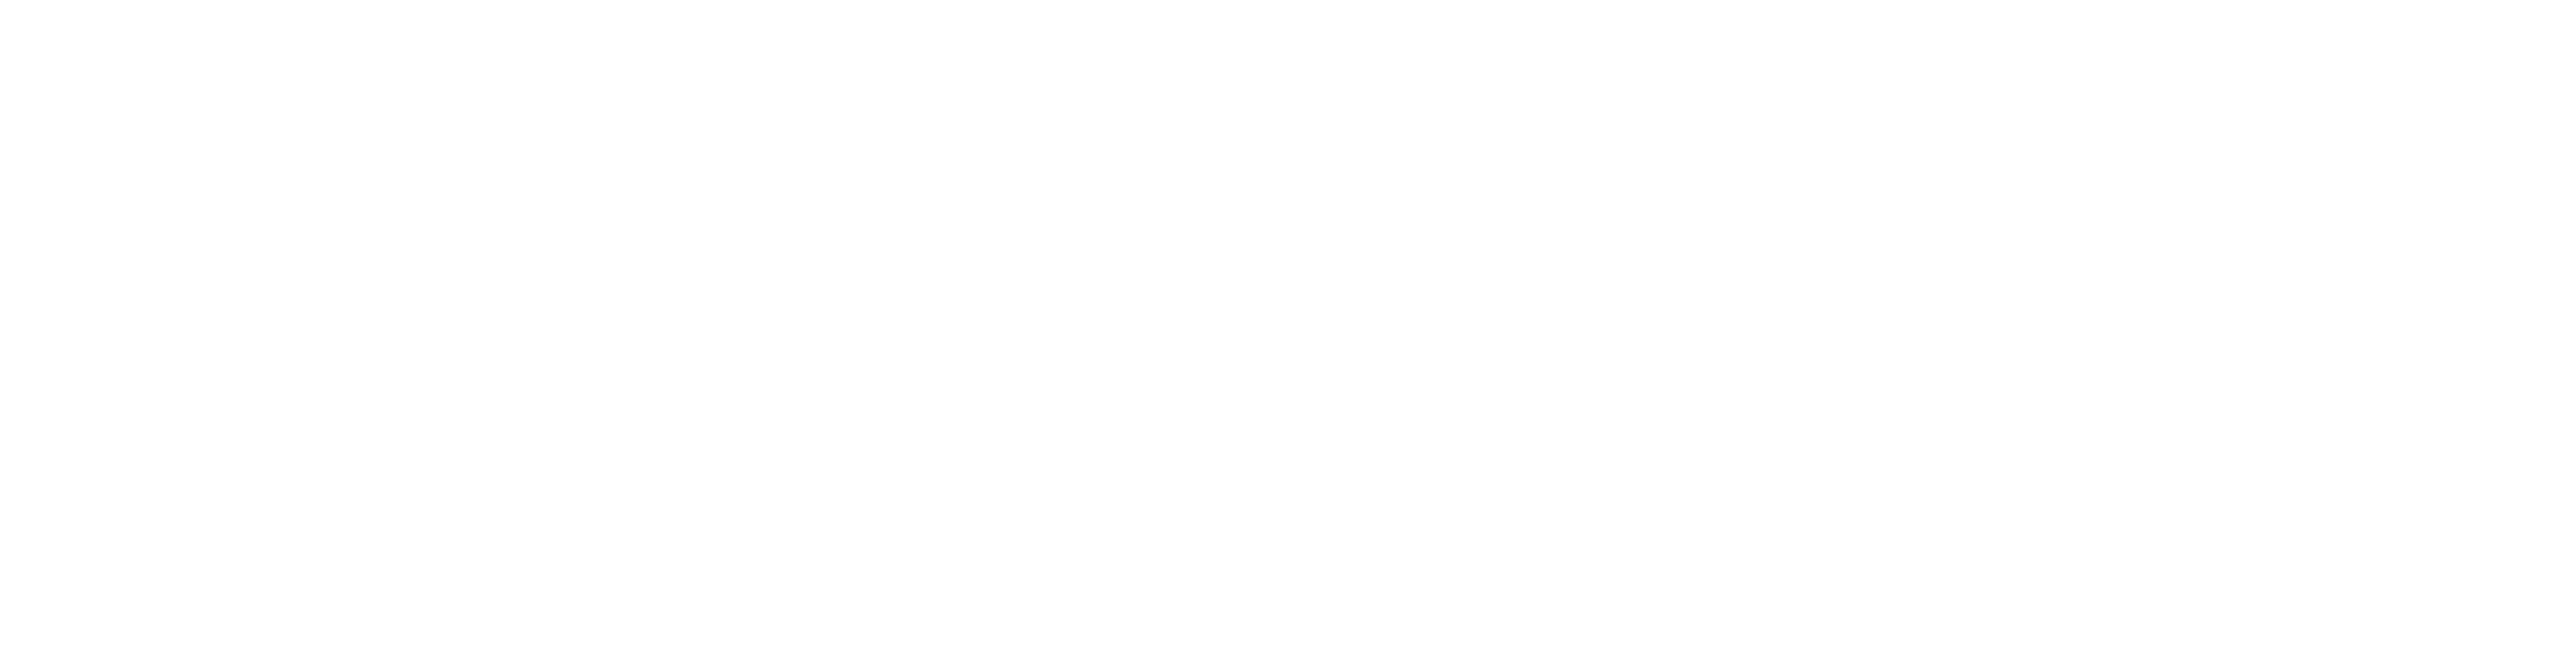 Cyberint white logo